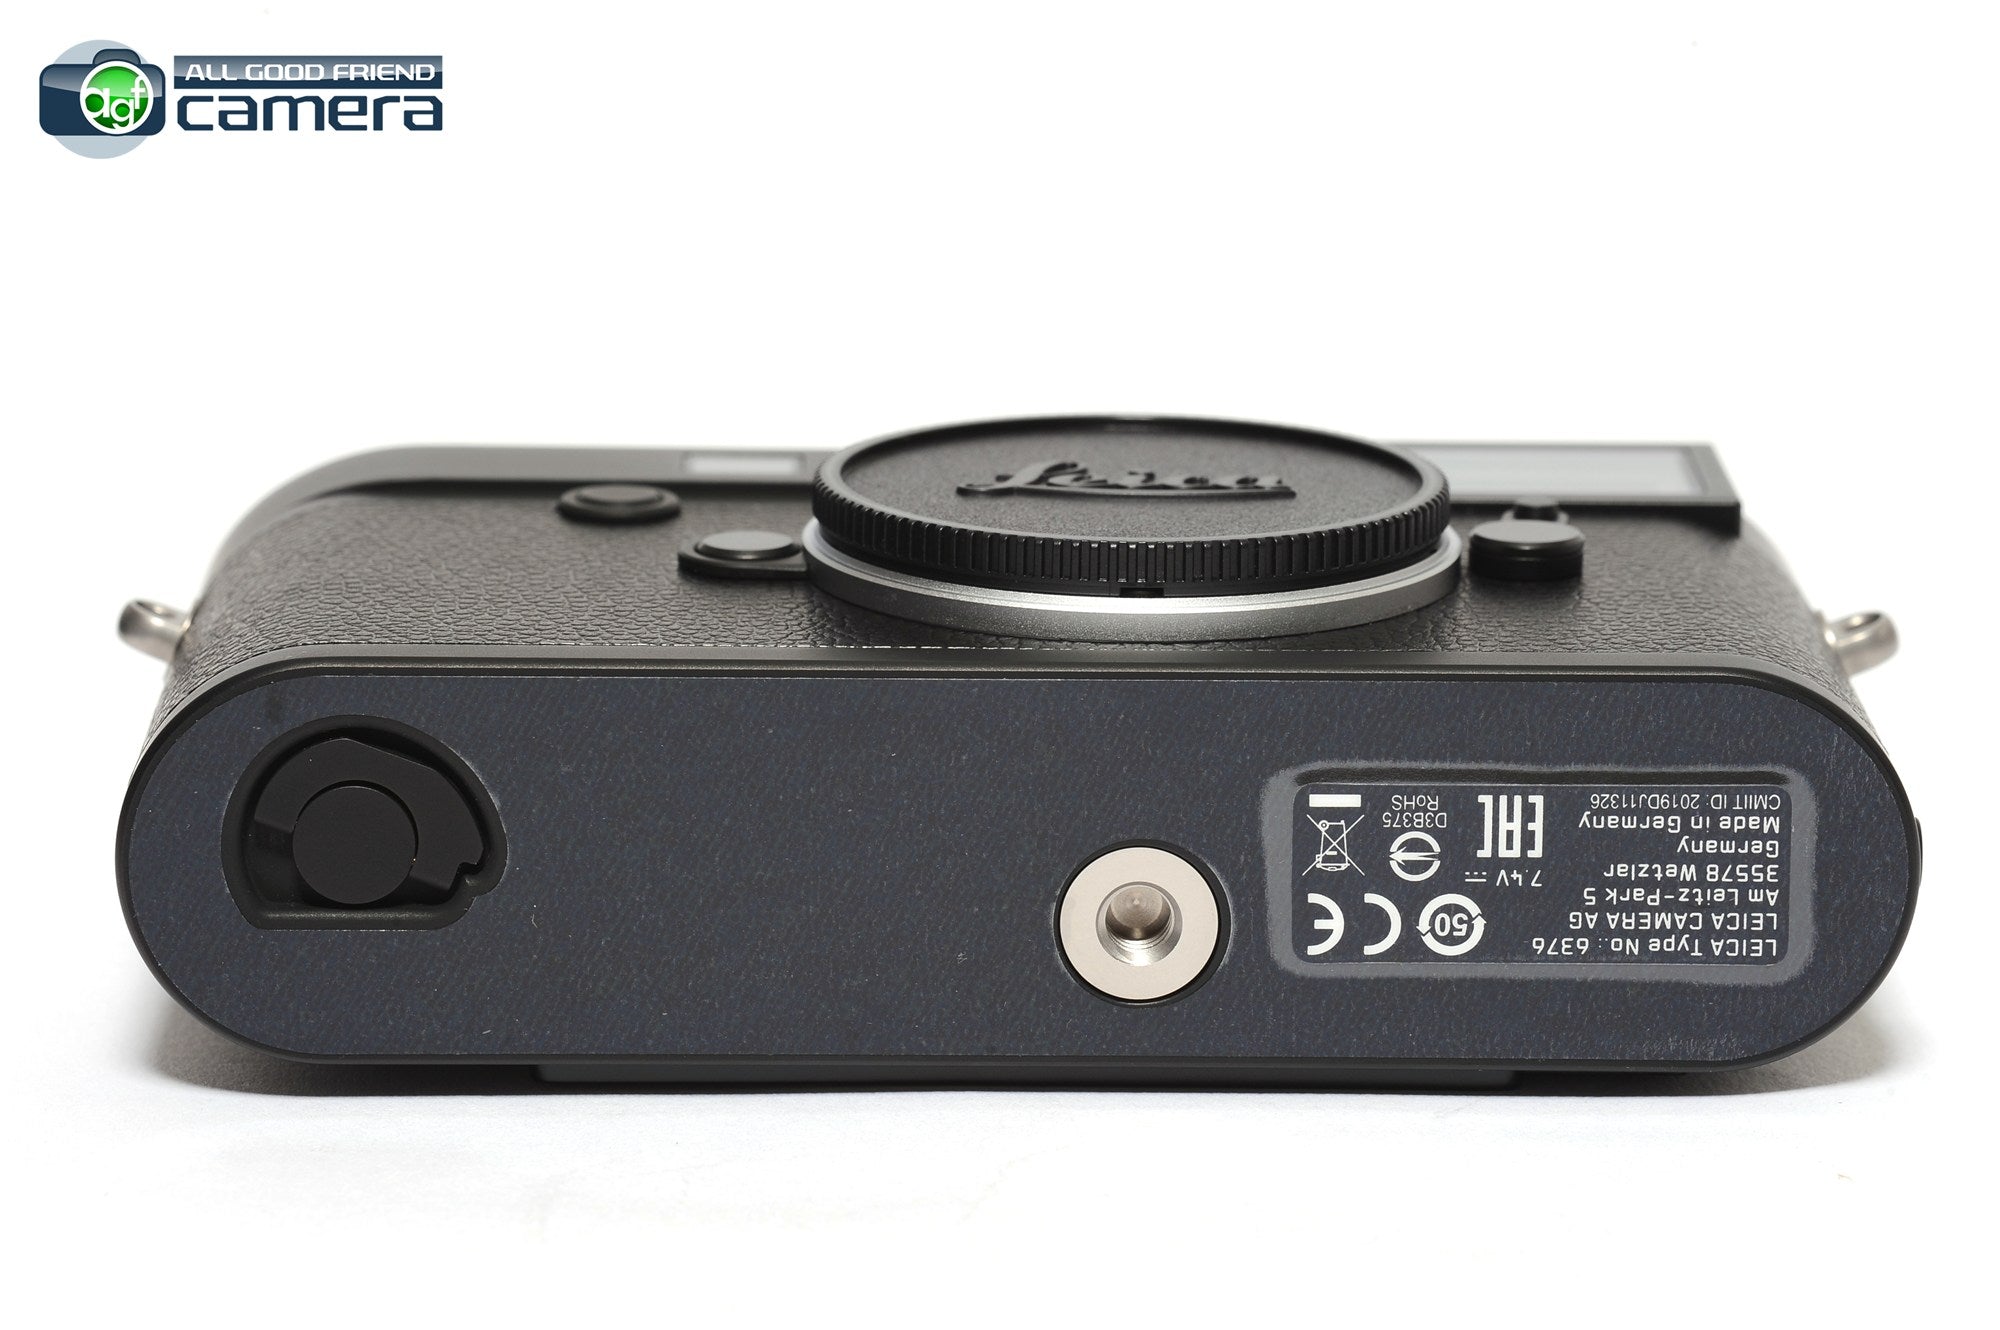 Leica Camera Wetzlar Germany – Official